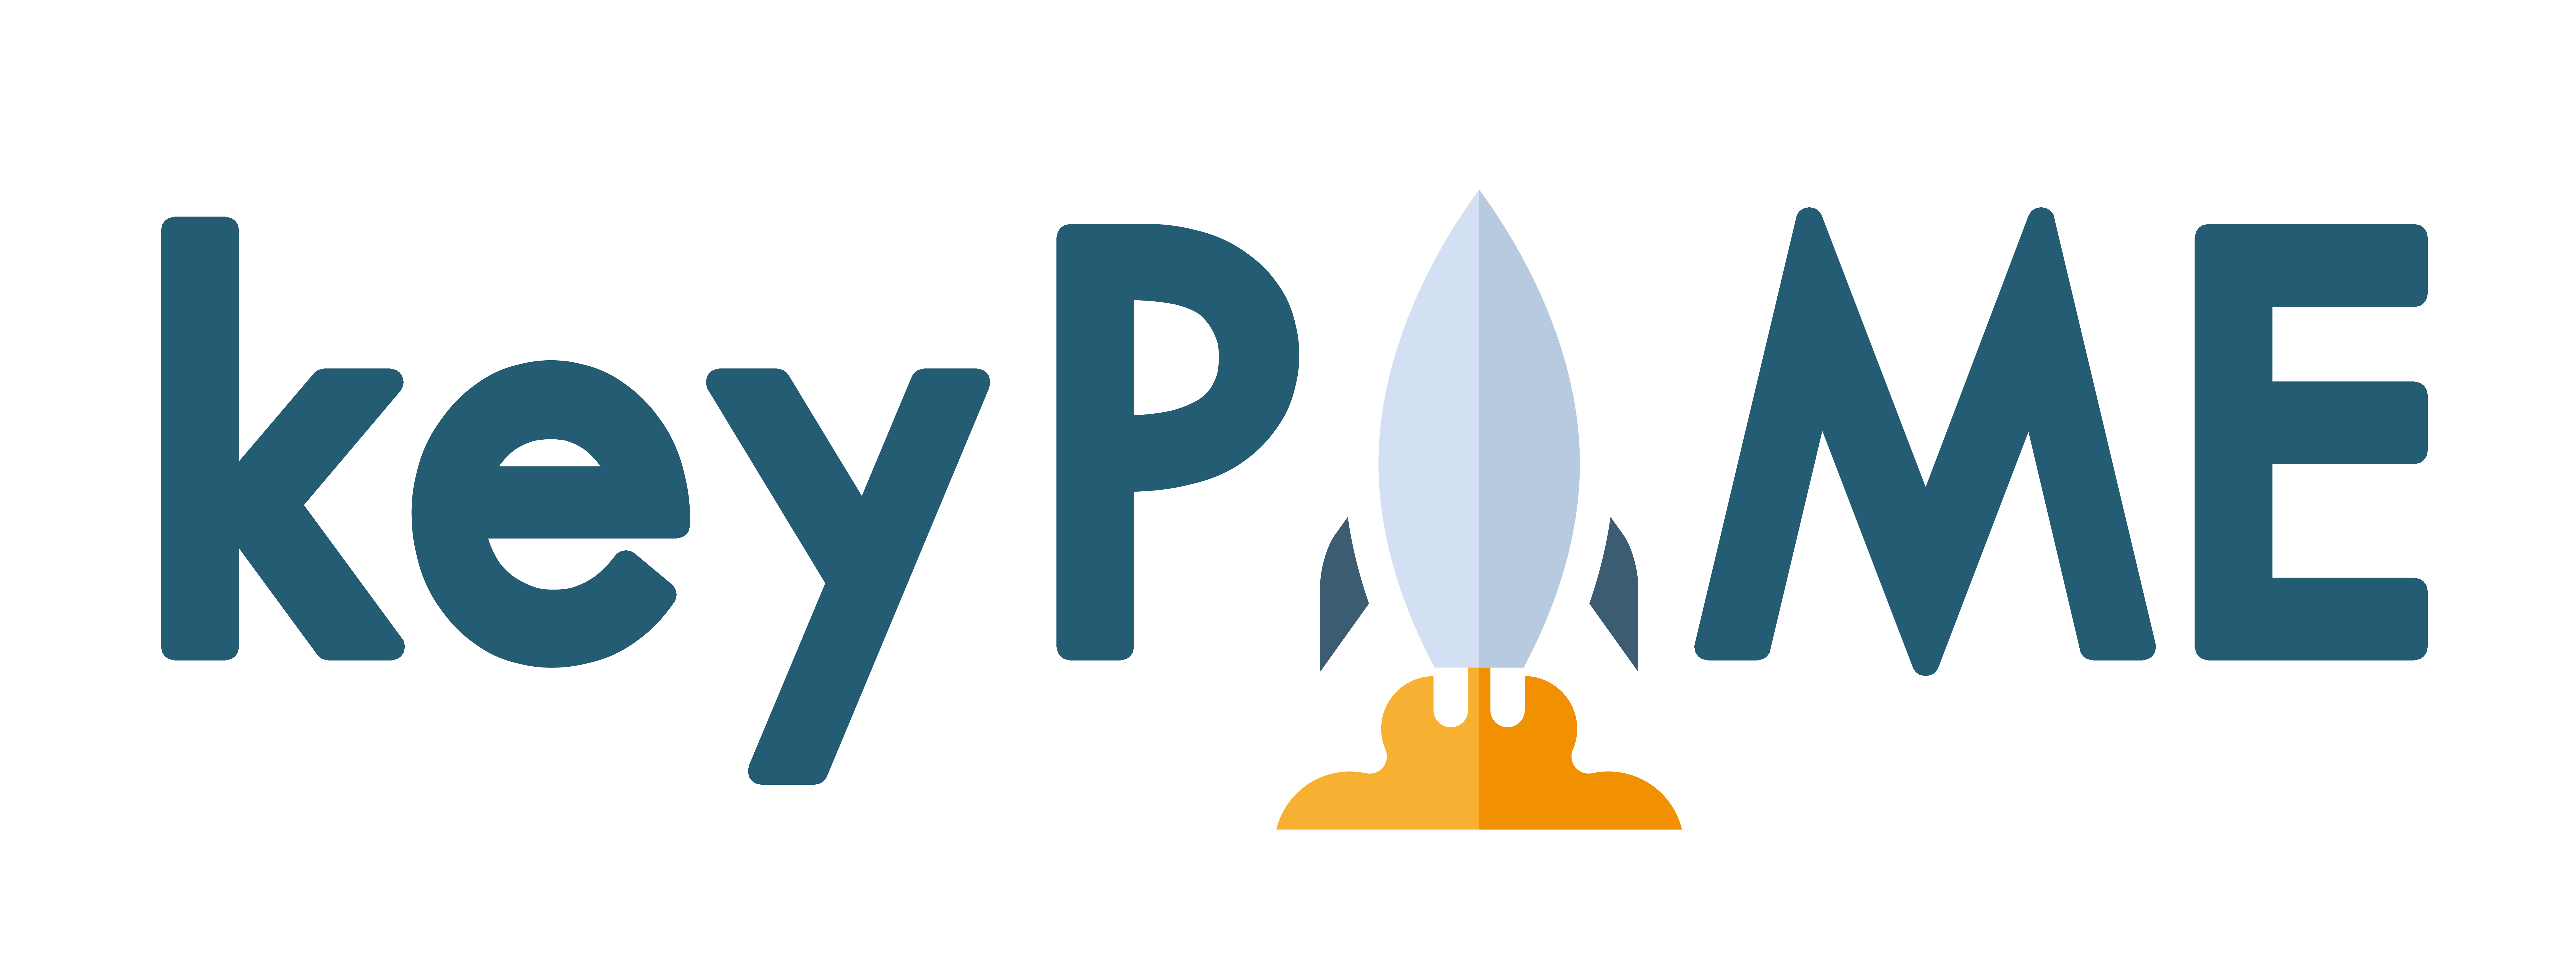 Logotipo keypyme